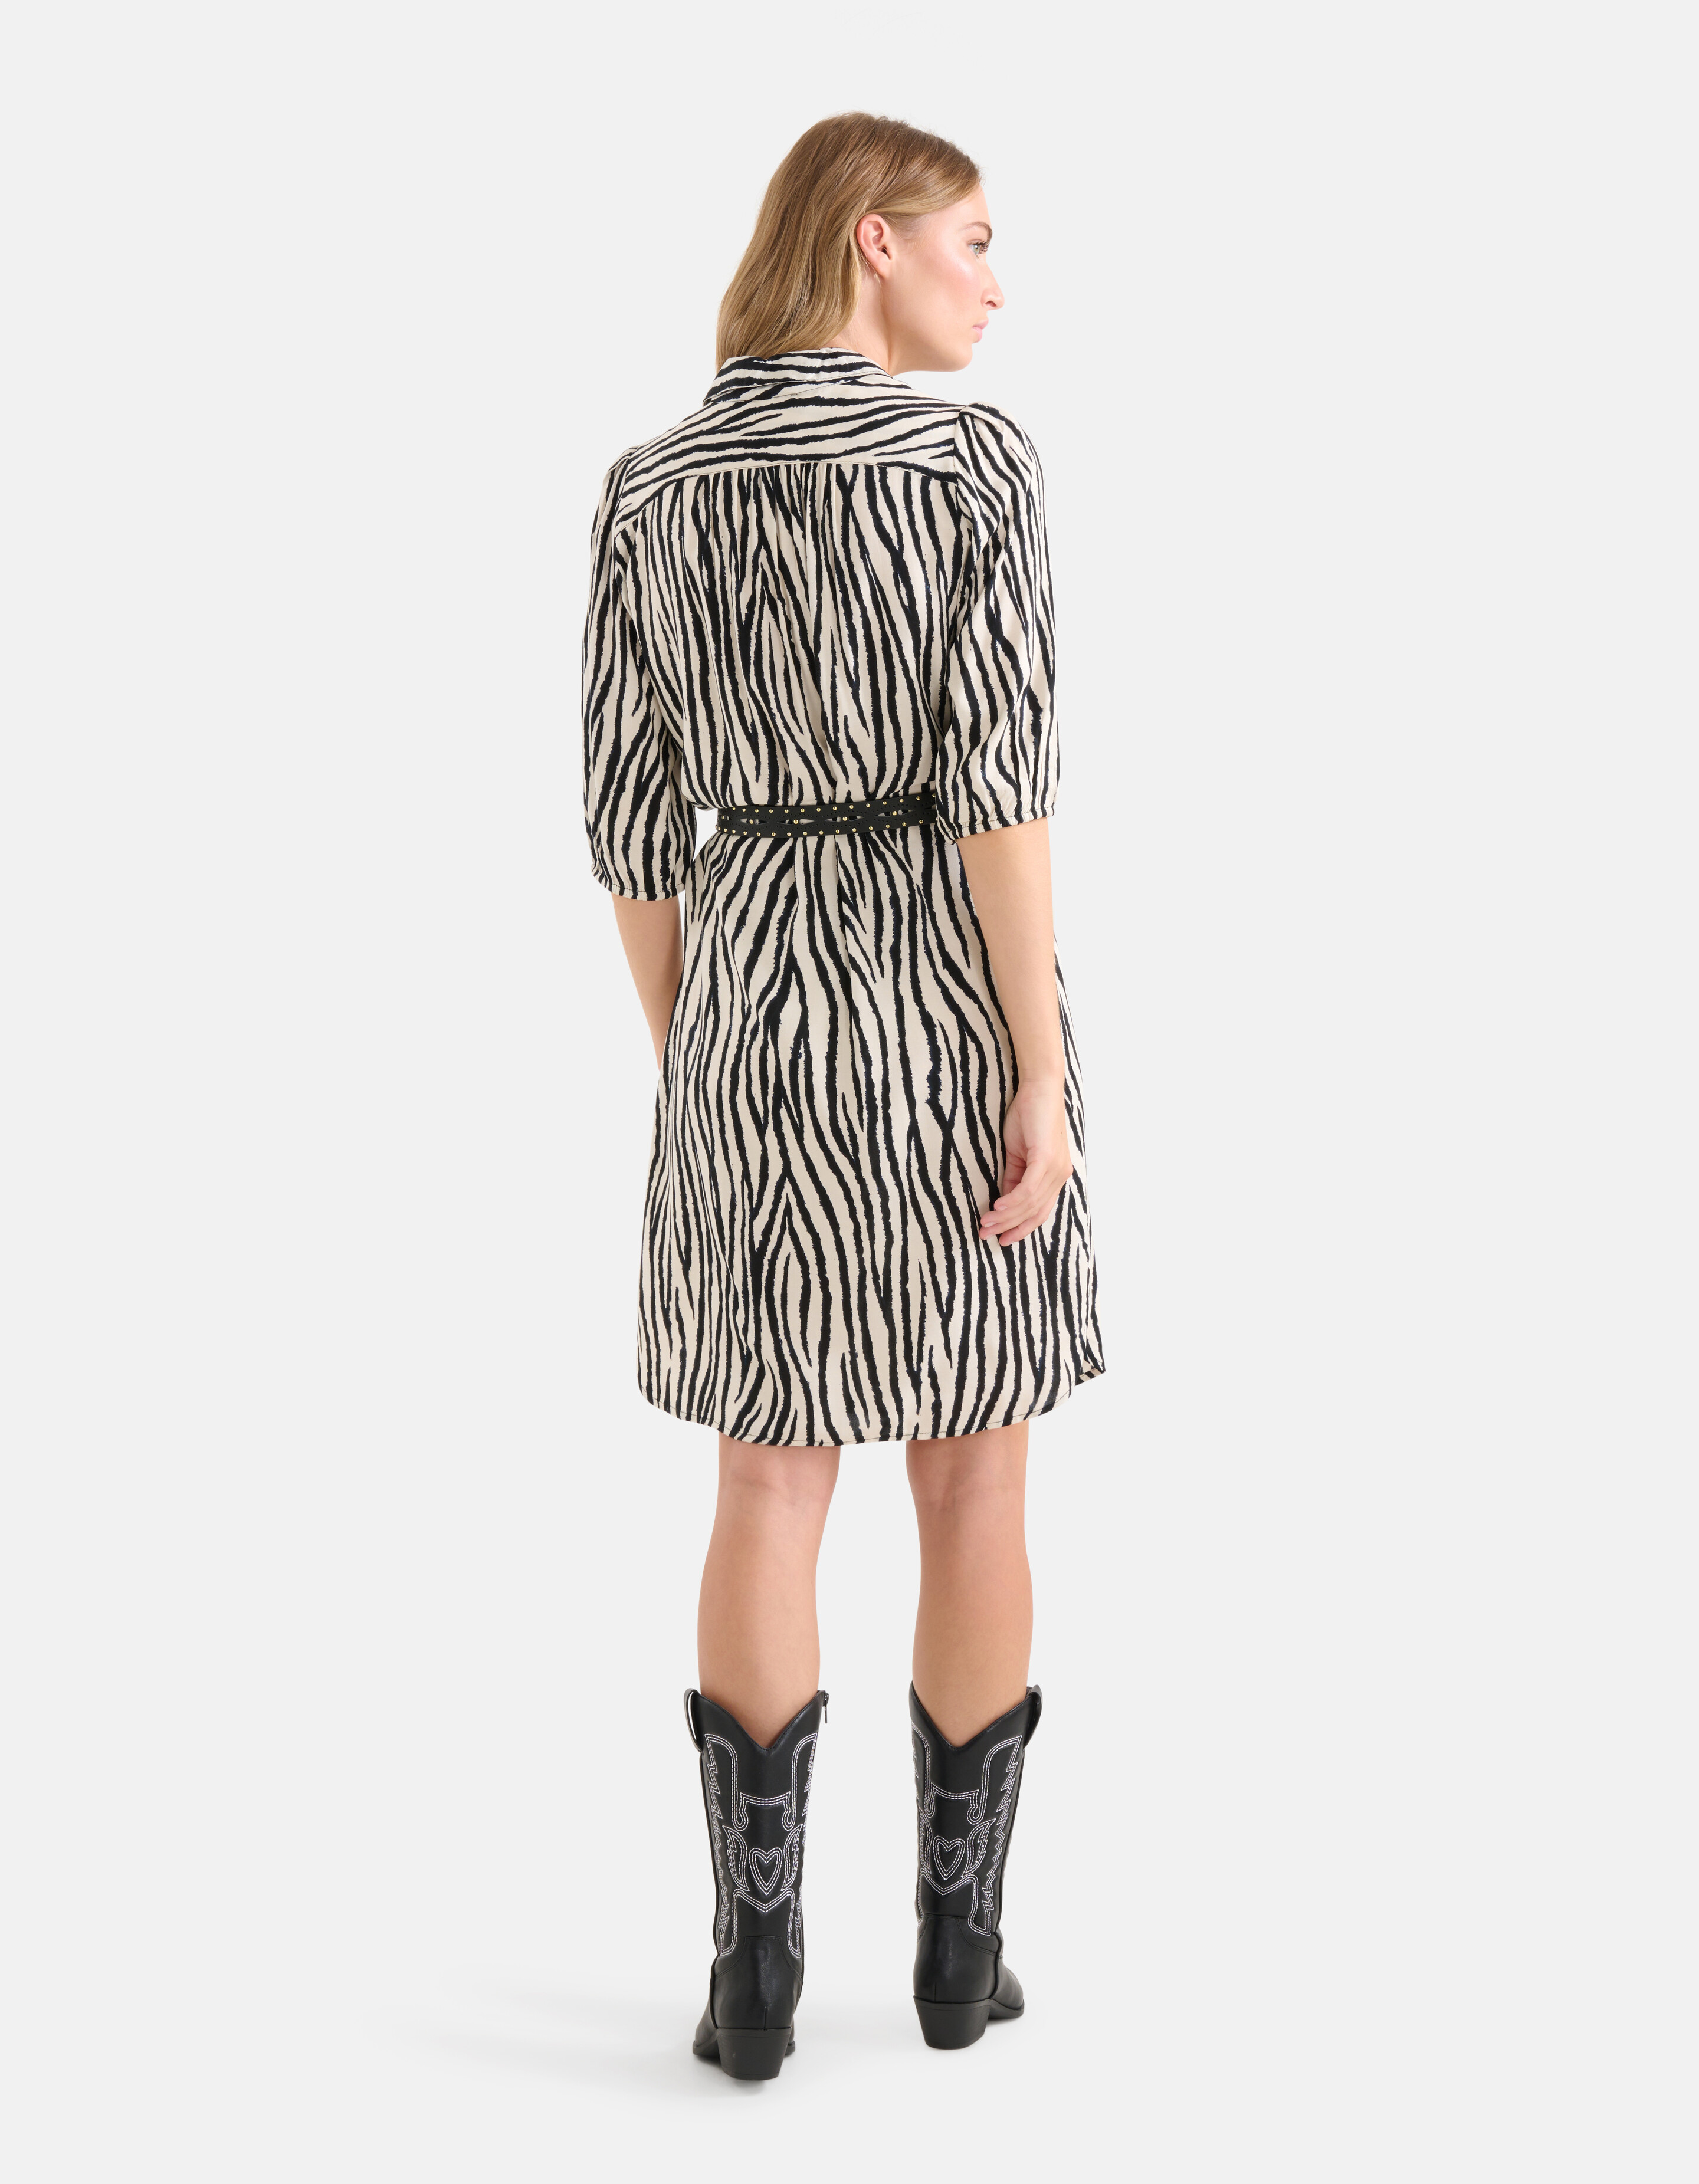 Zebra bedrucktes Kleid Schwarz/Weiß SHOEBY WOMEN